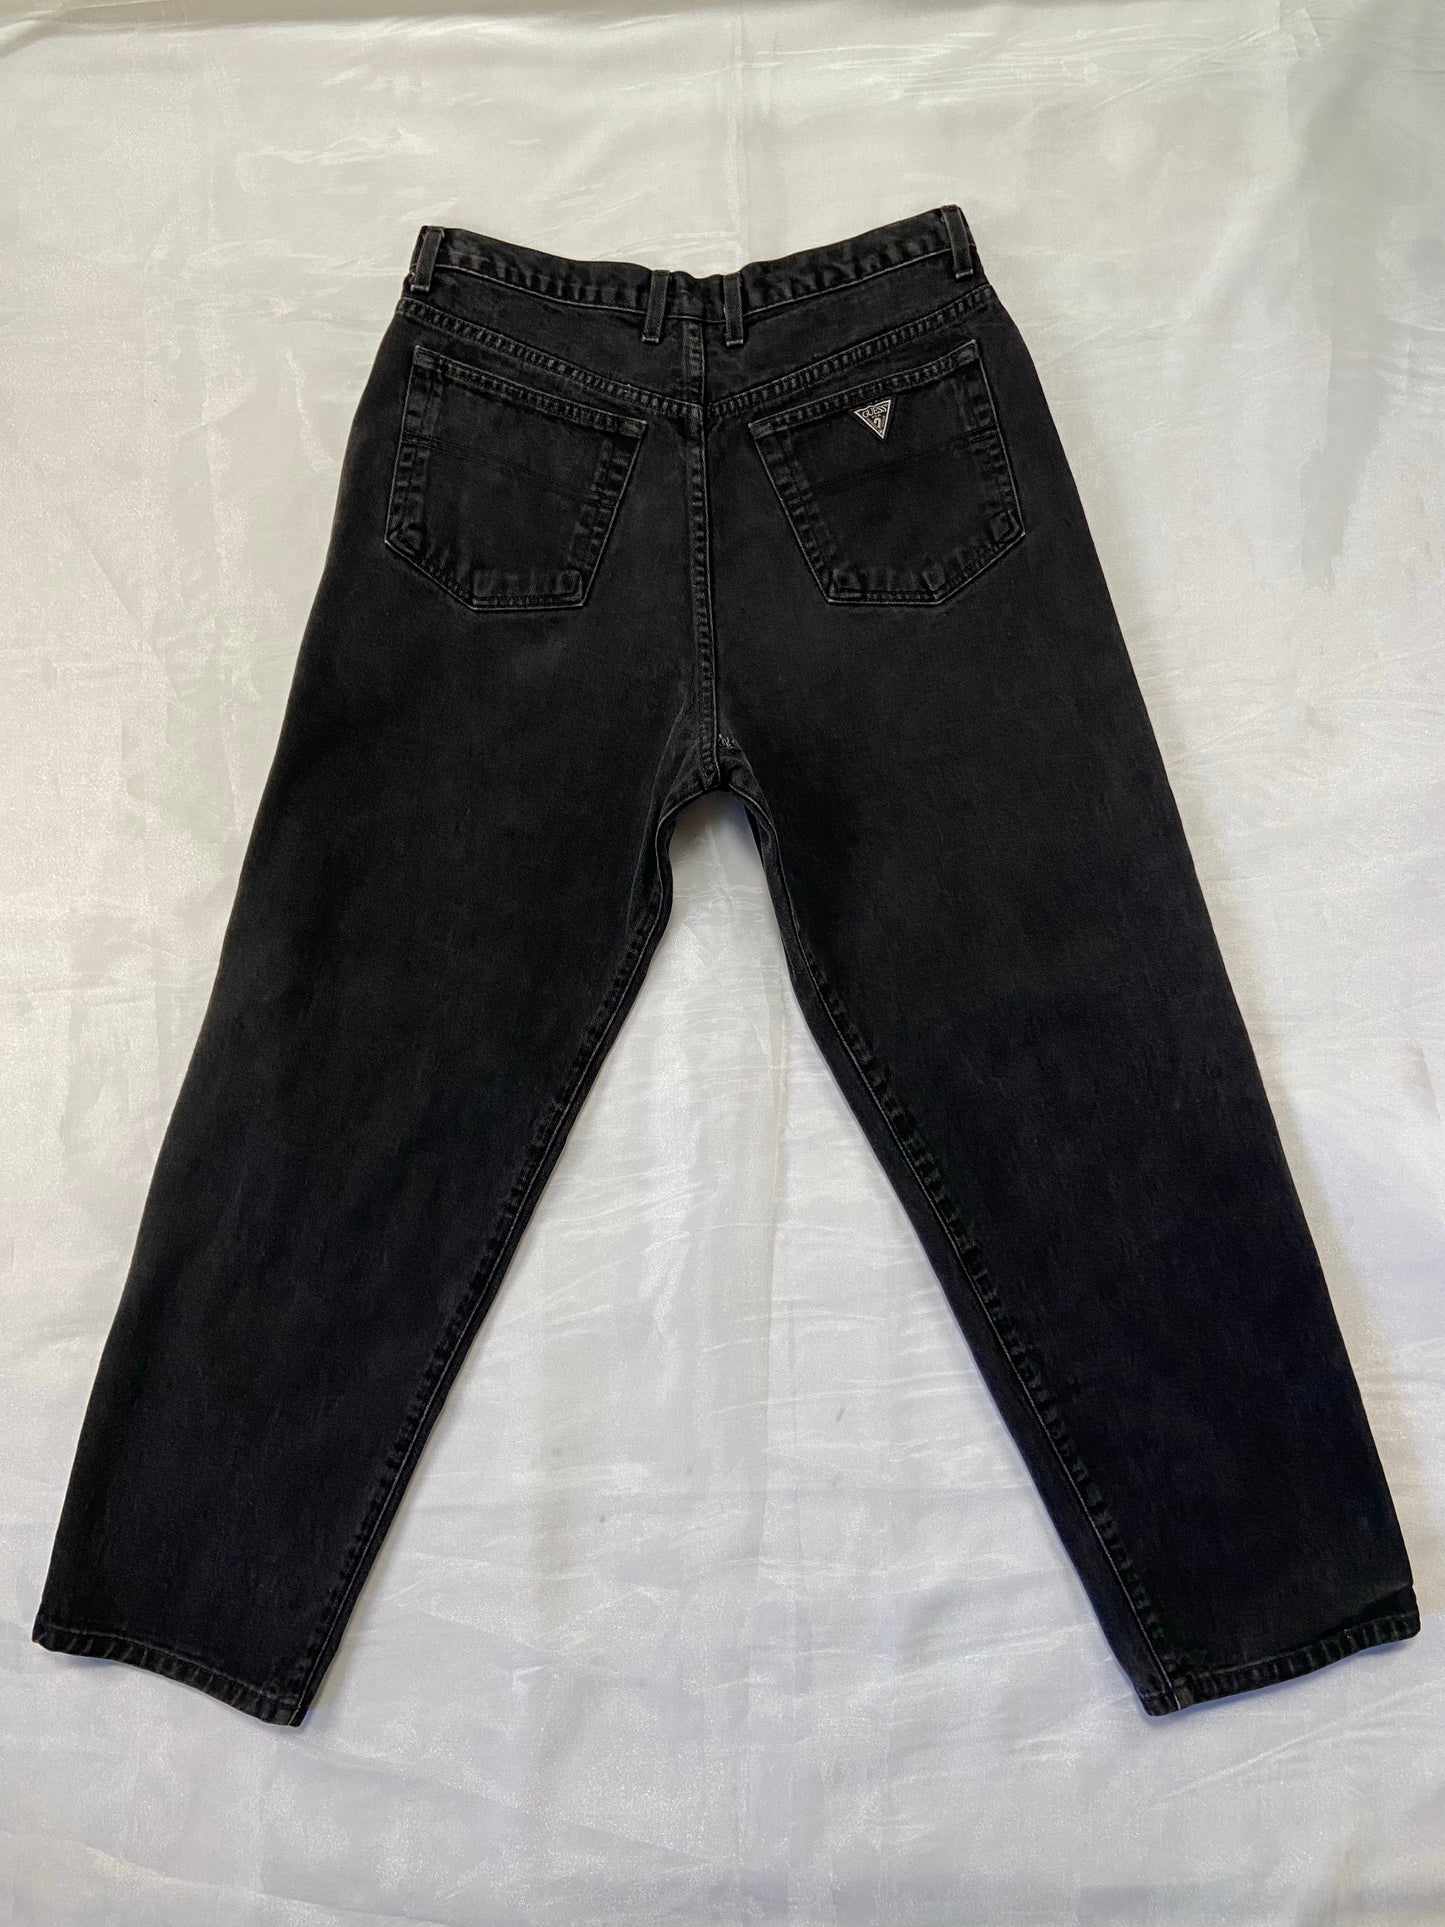 Black GUESS Jeans - 30”